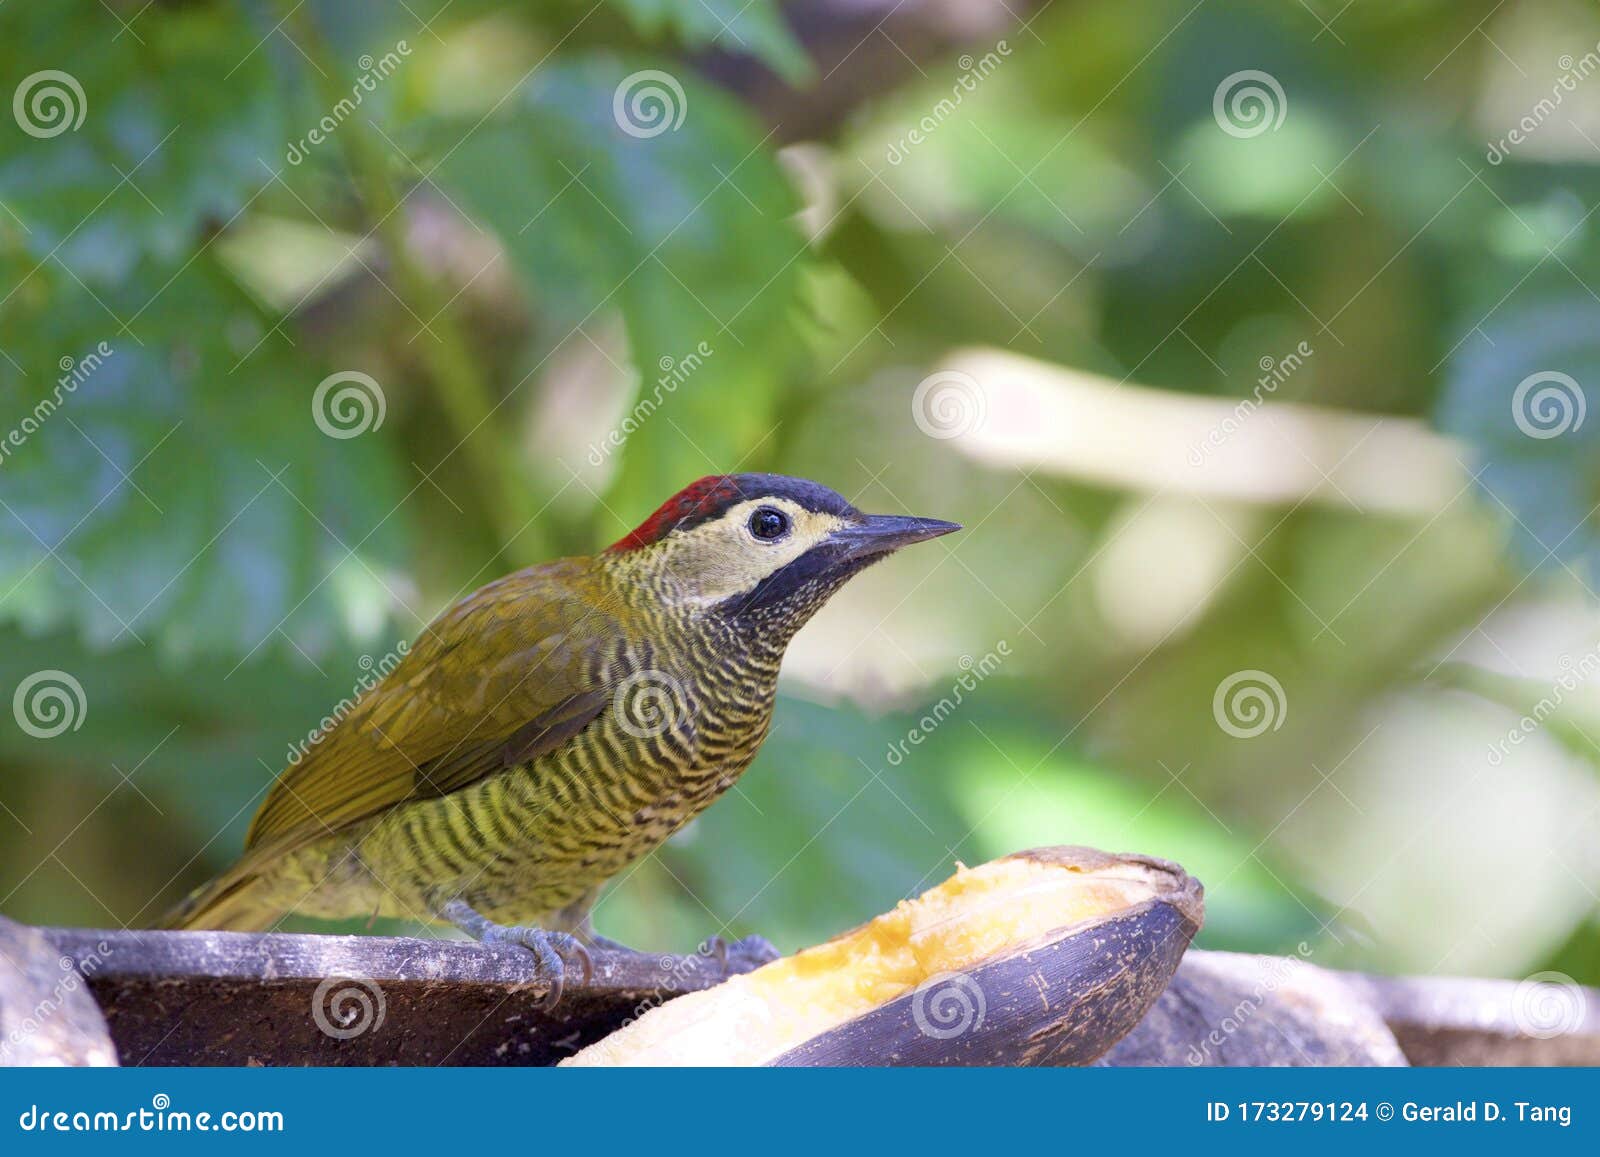 golden-olive woodpecker    844355